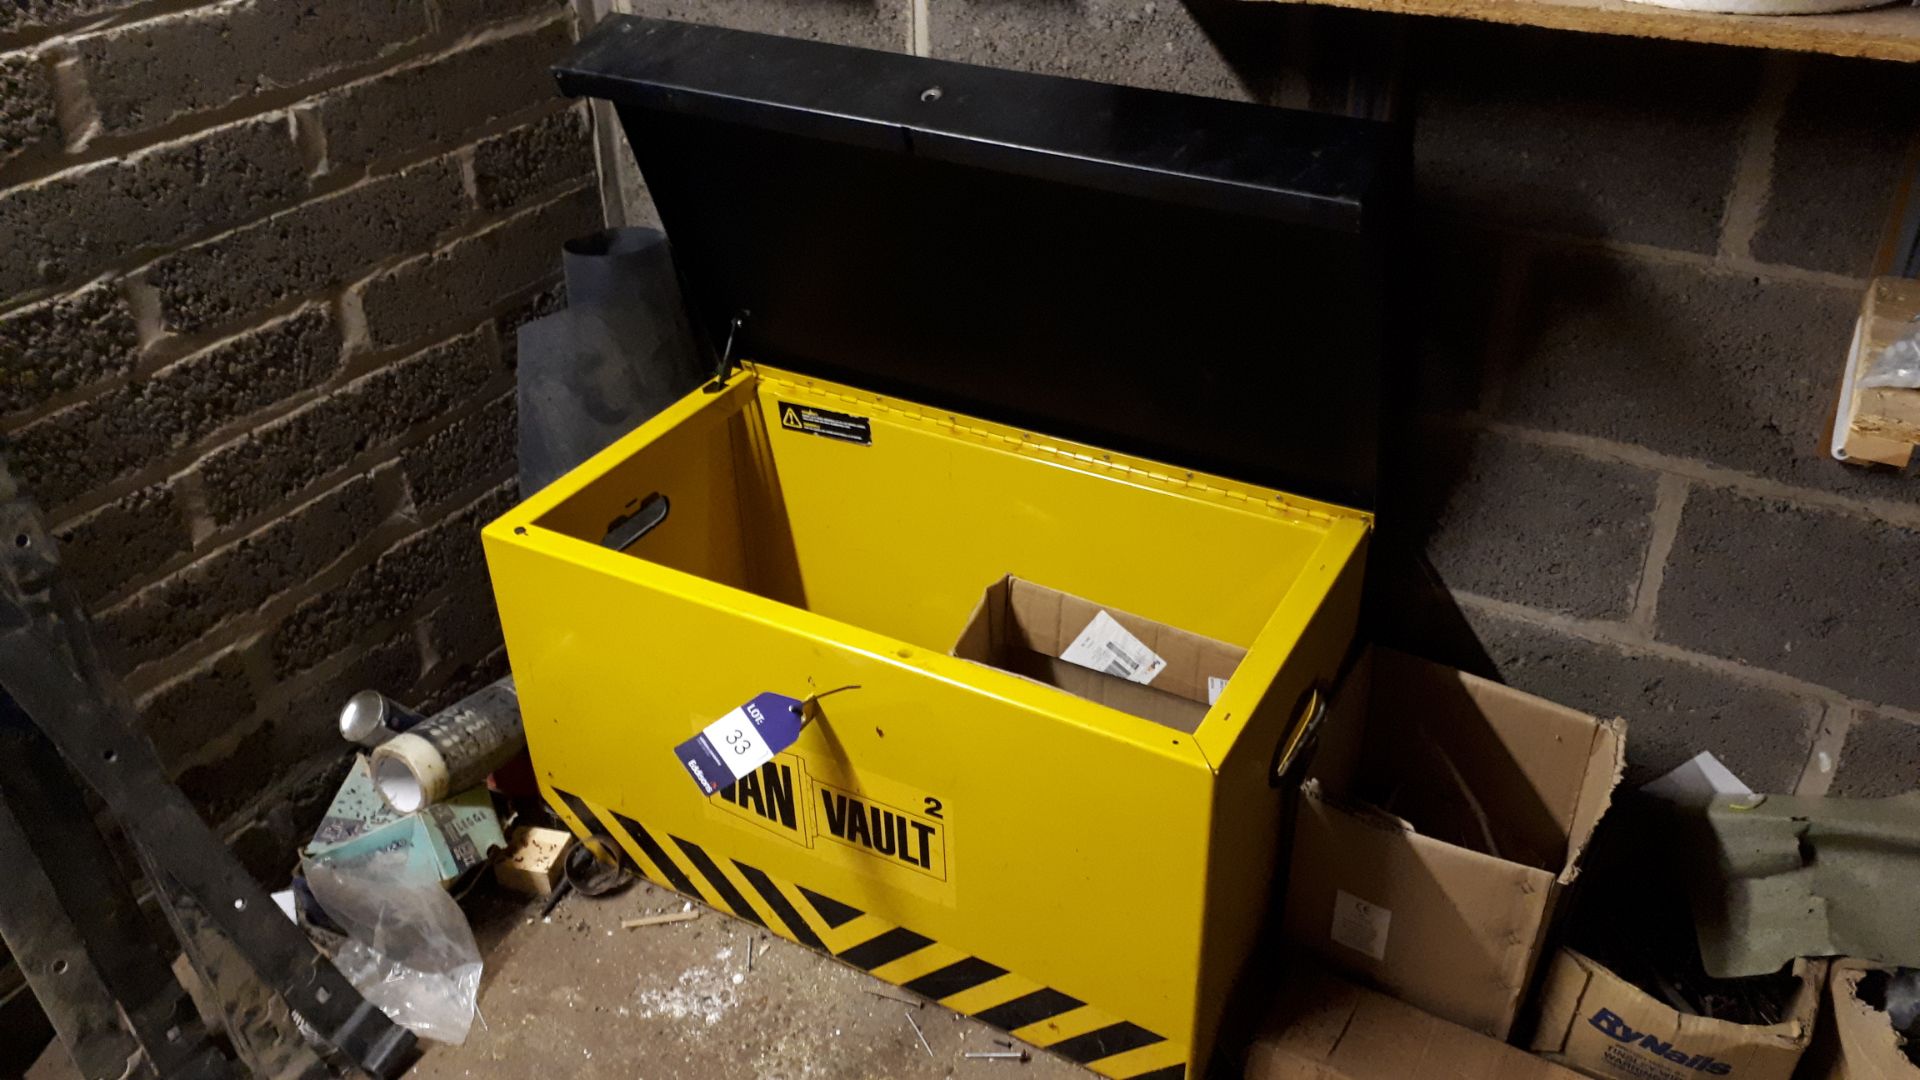 Van Vault site box (No key)